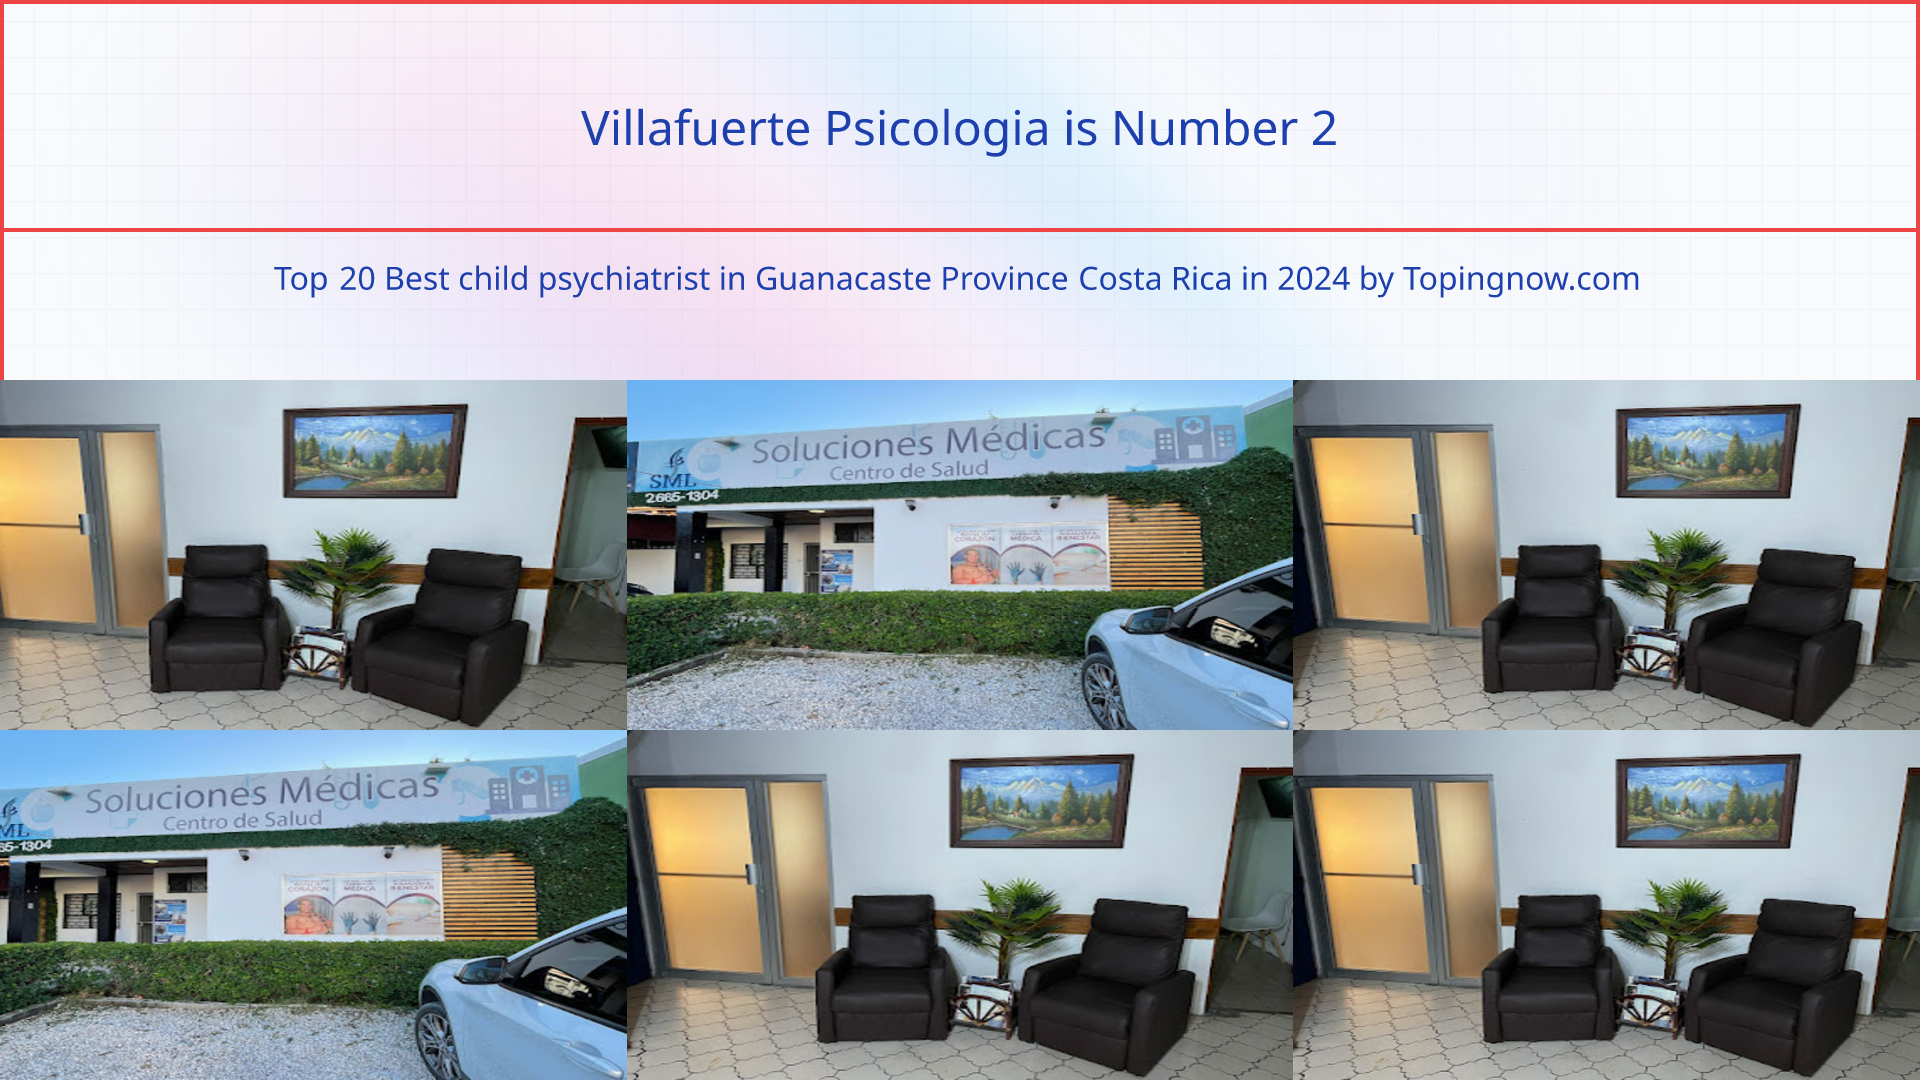 Villafuerte Psicologia: Top 20 Best child psychiatrist in Guanacaste Province Costa Rica in 2024